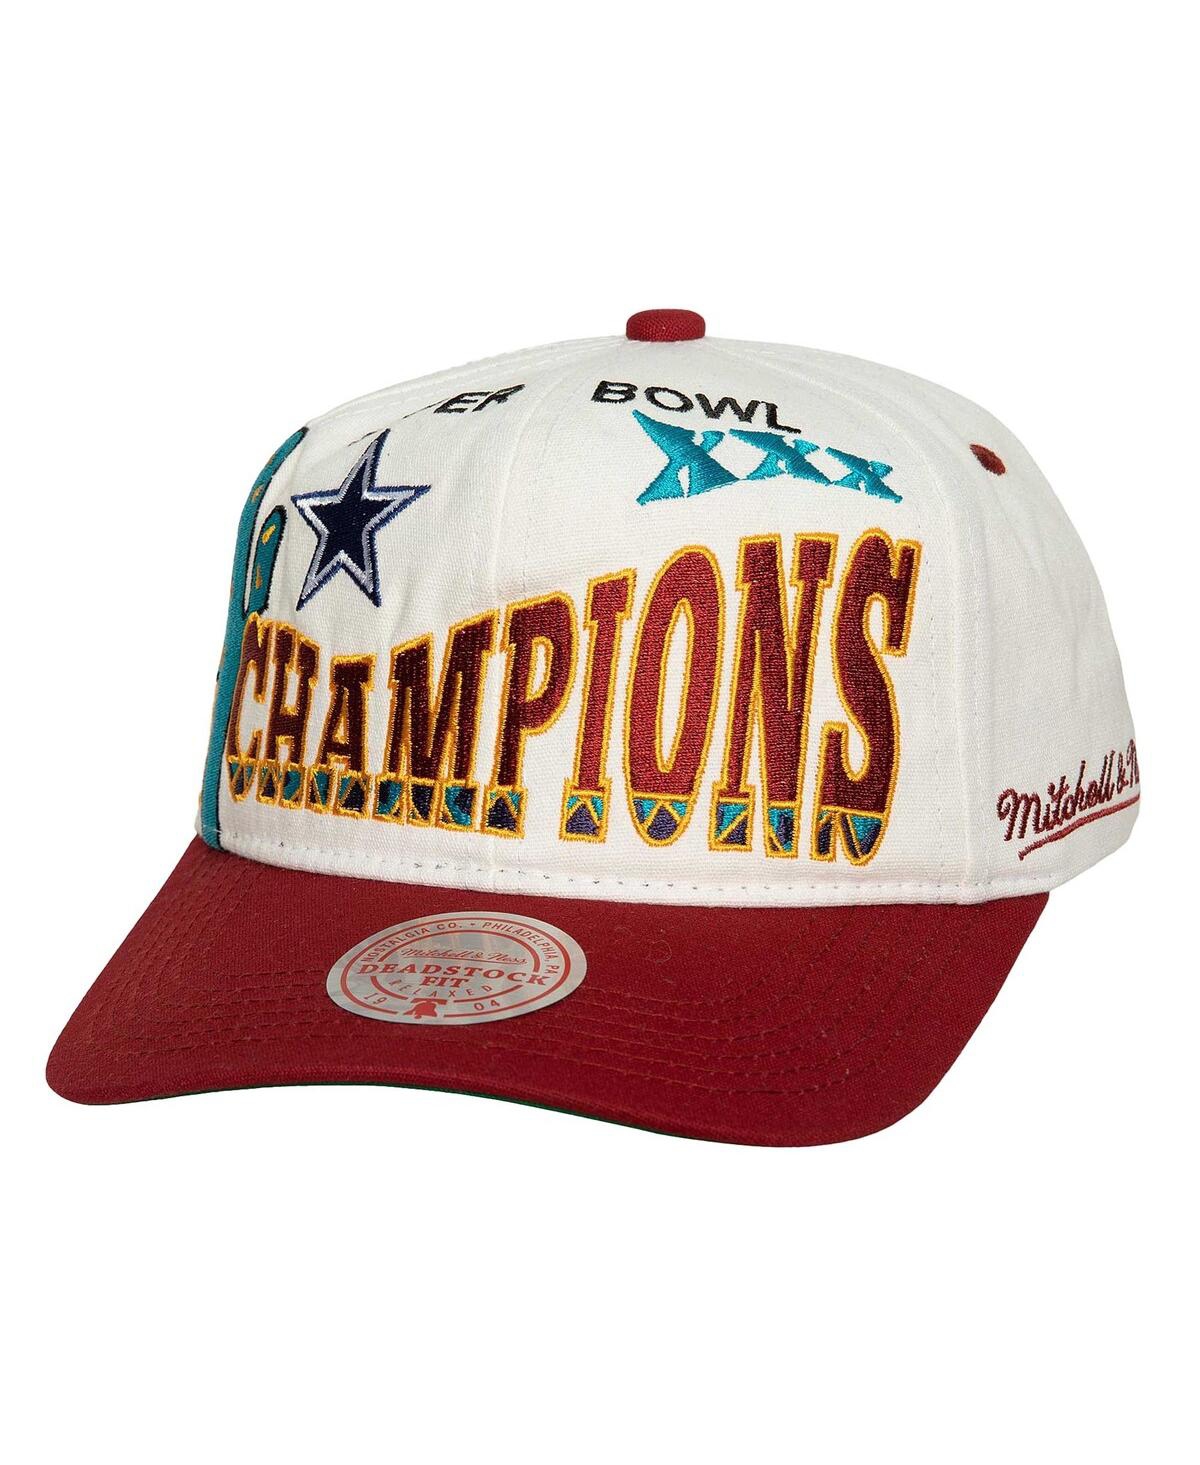 Mitchell & Ness Men's White/red Dallas Cowboys Super Bowl Champions Snapback Hat